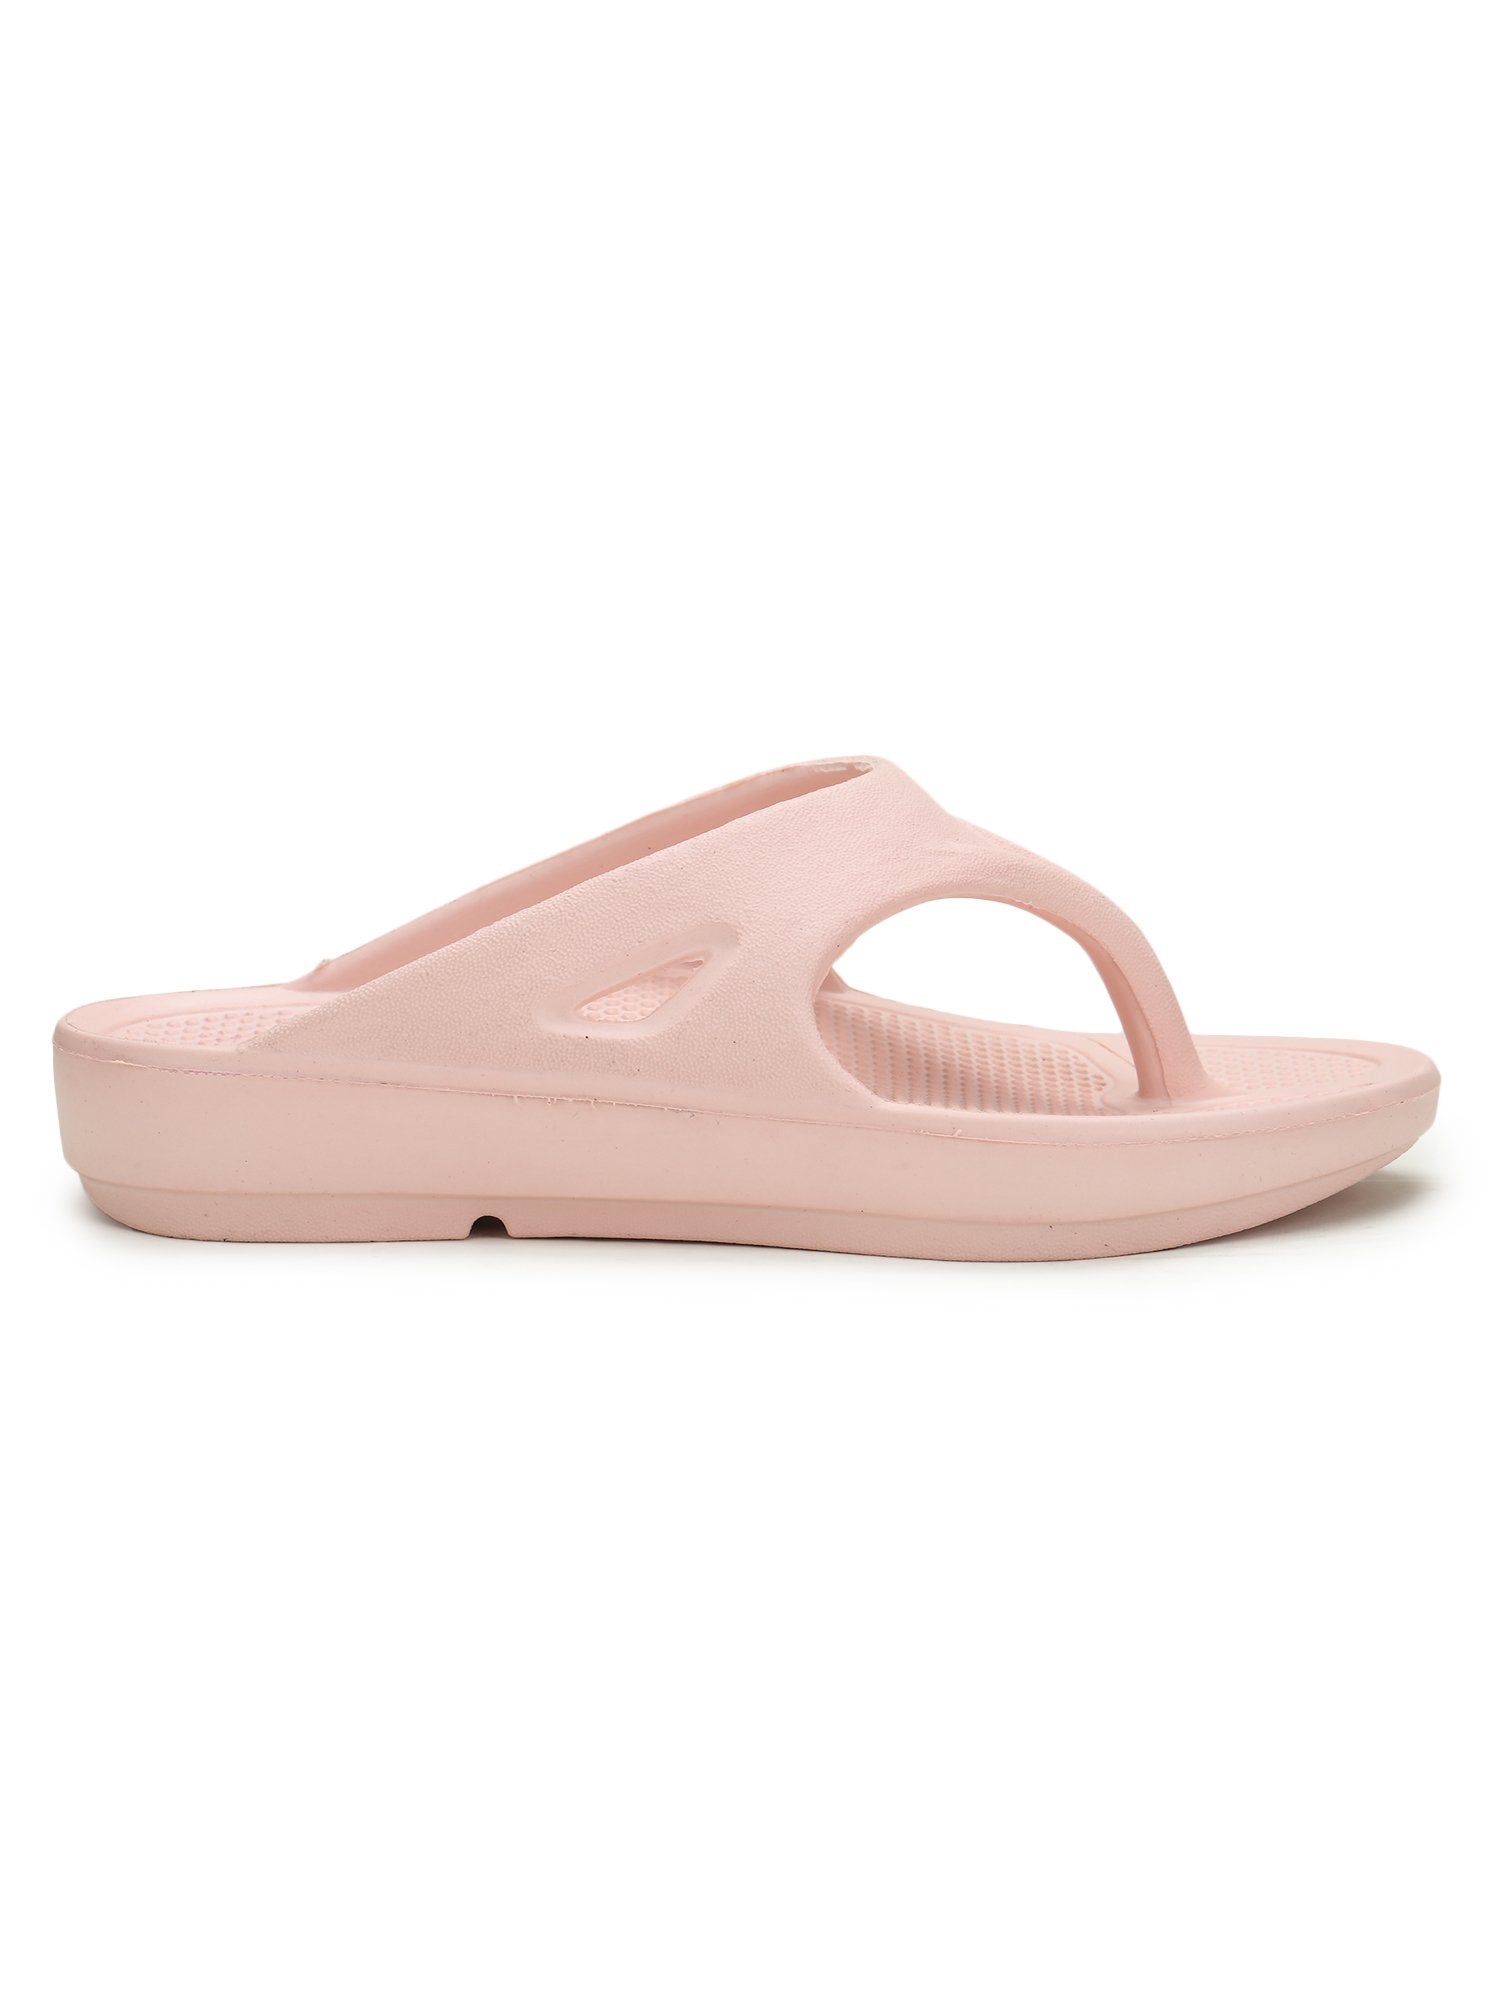 Women Flat Sandals : Buy Ladies Sandals Online - TrishaStore.com